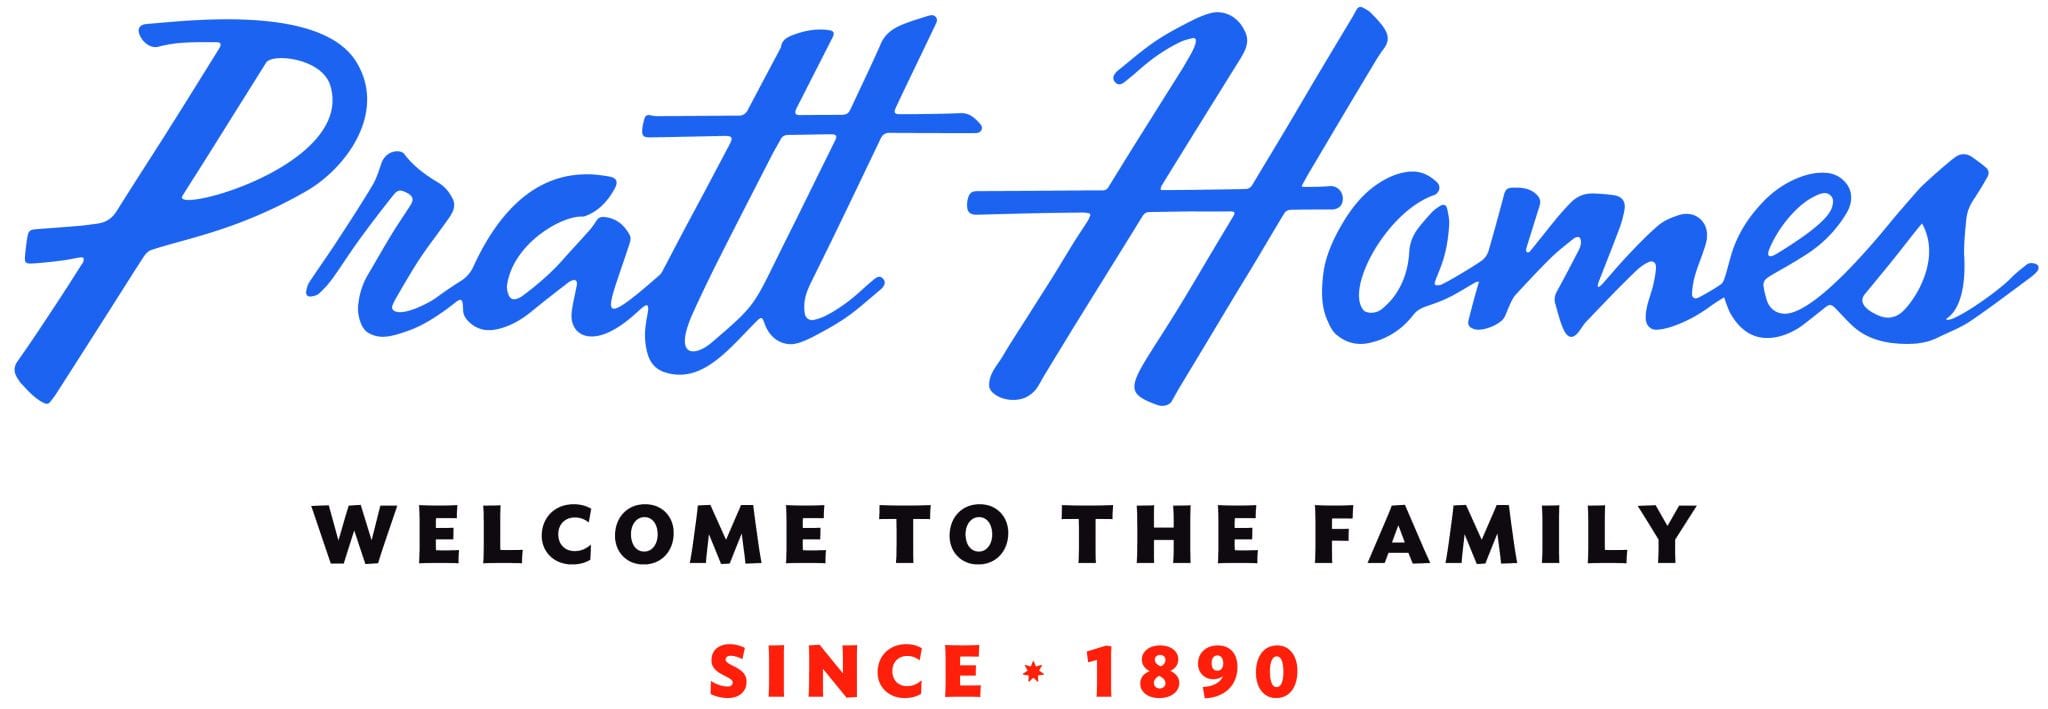 Pratt Homes logo